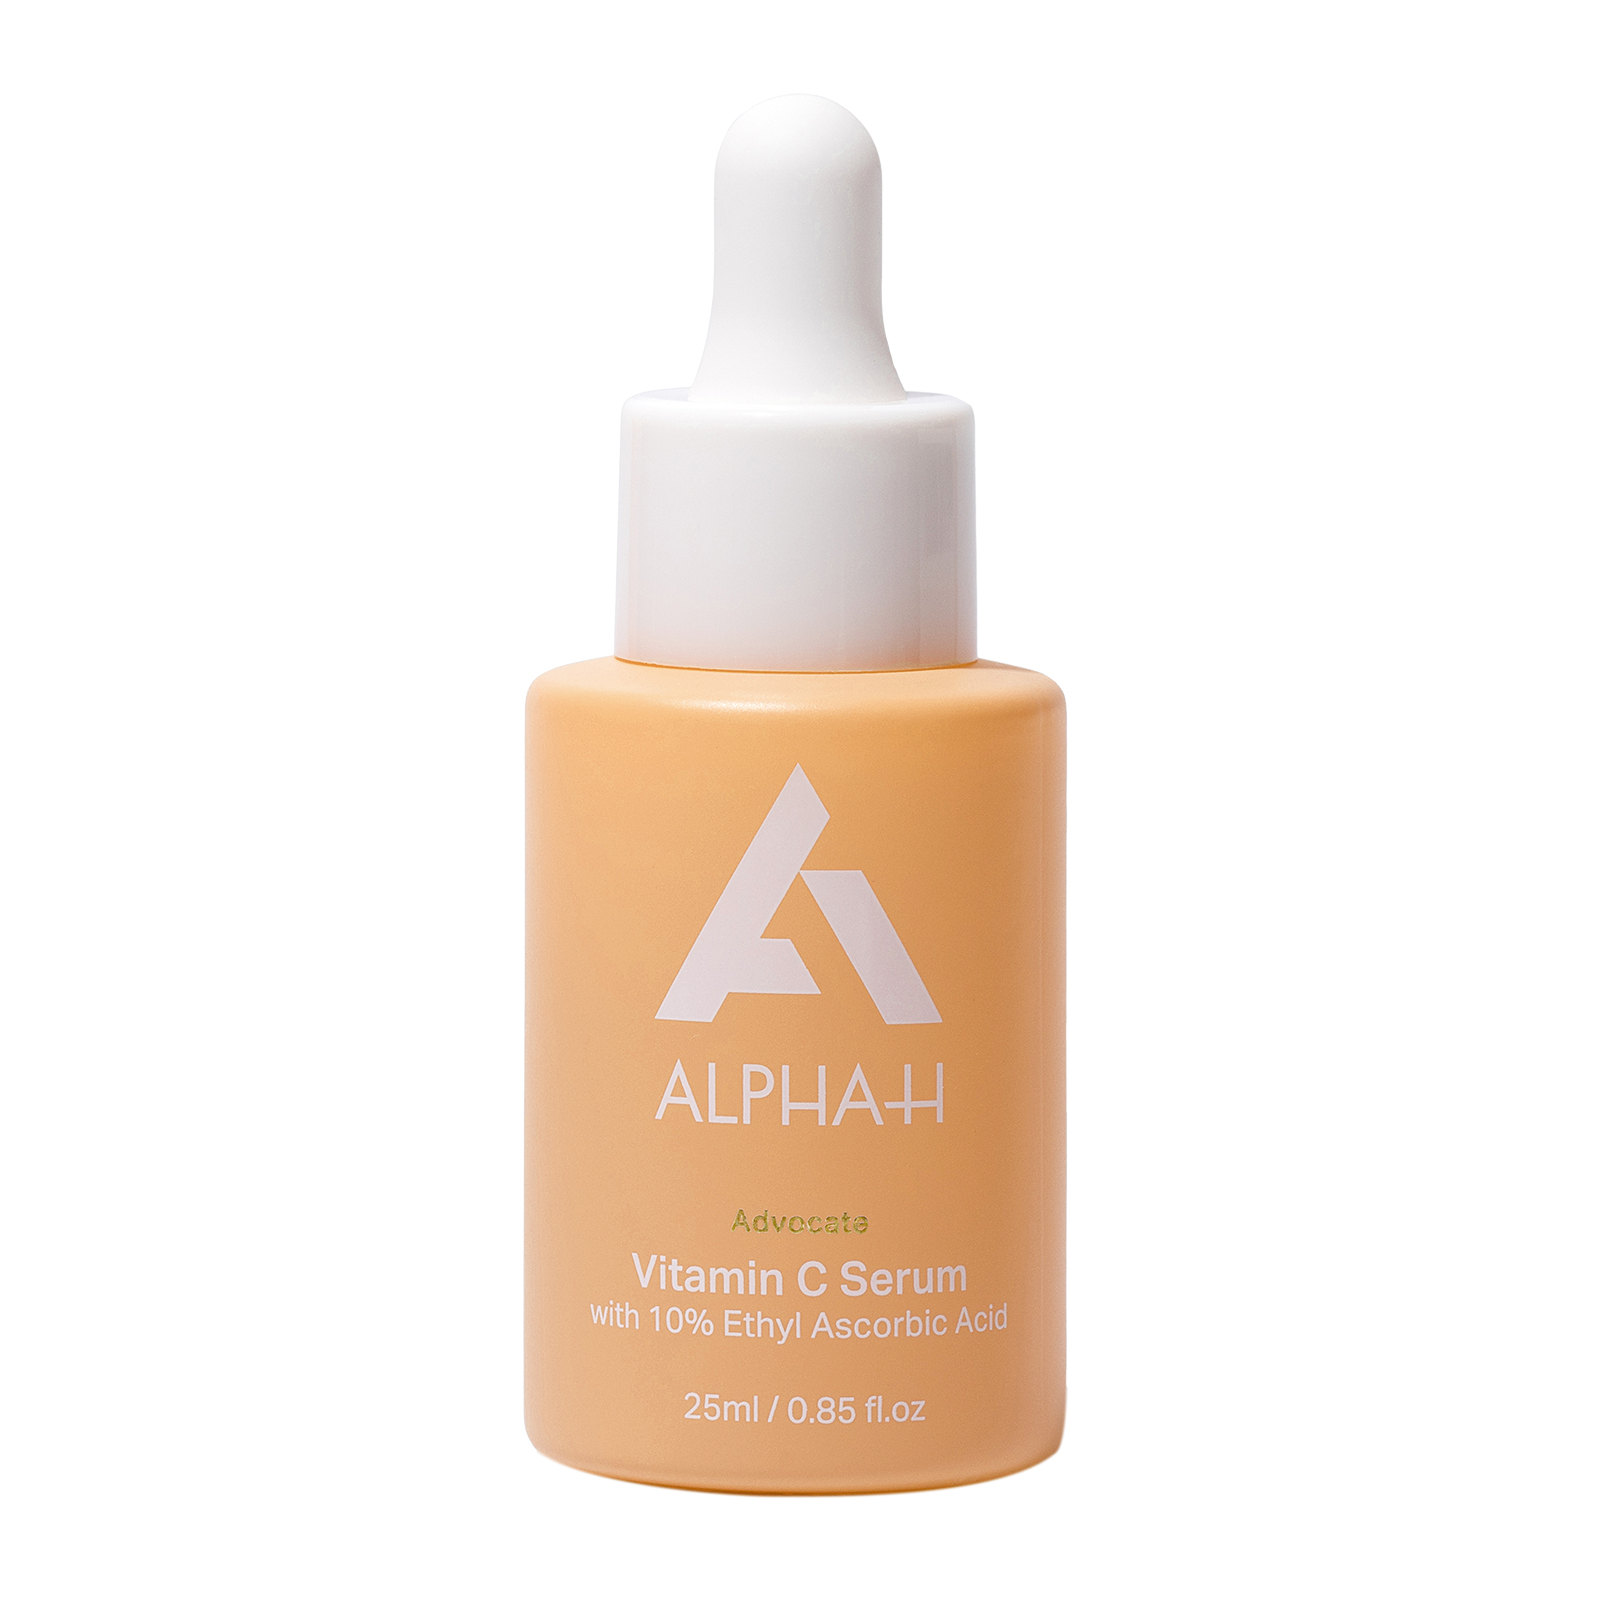 Fallachi beauty - Shop - Alpha-H - Vitamin C Serum